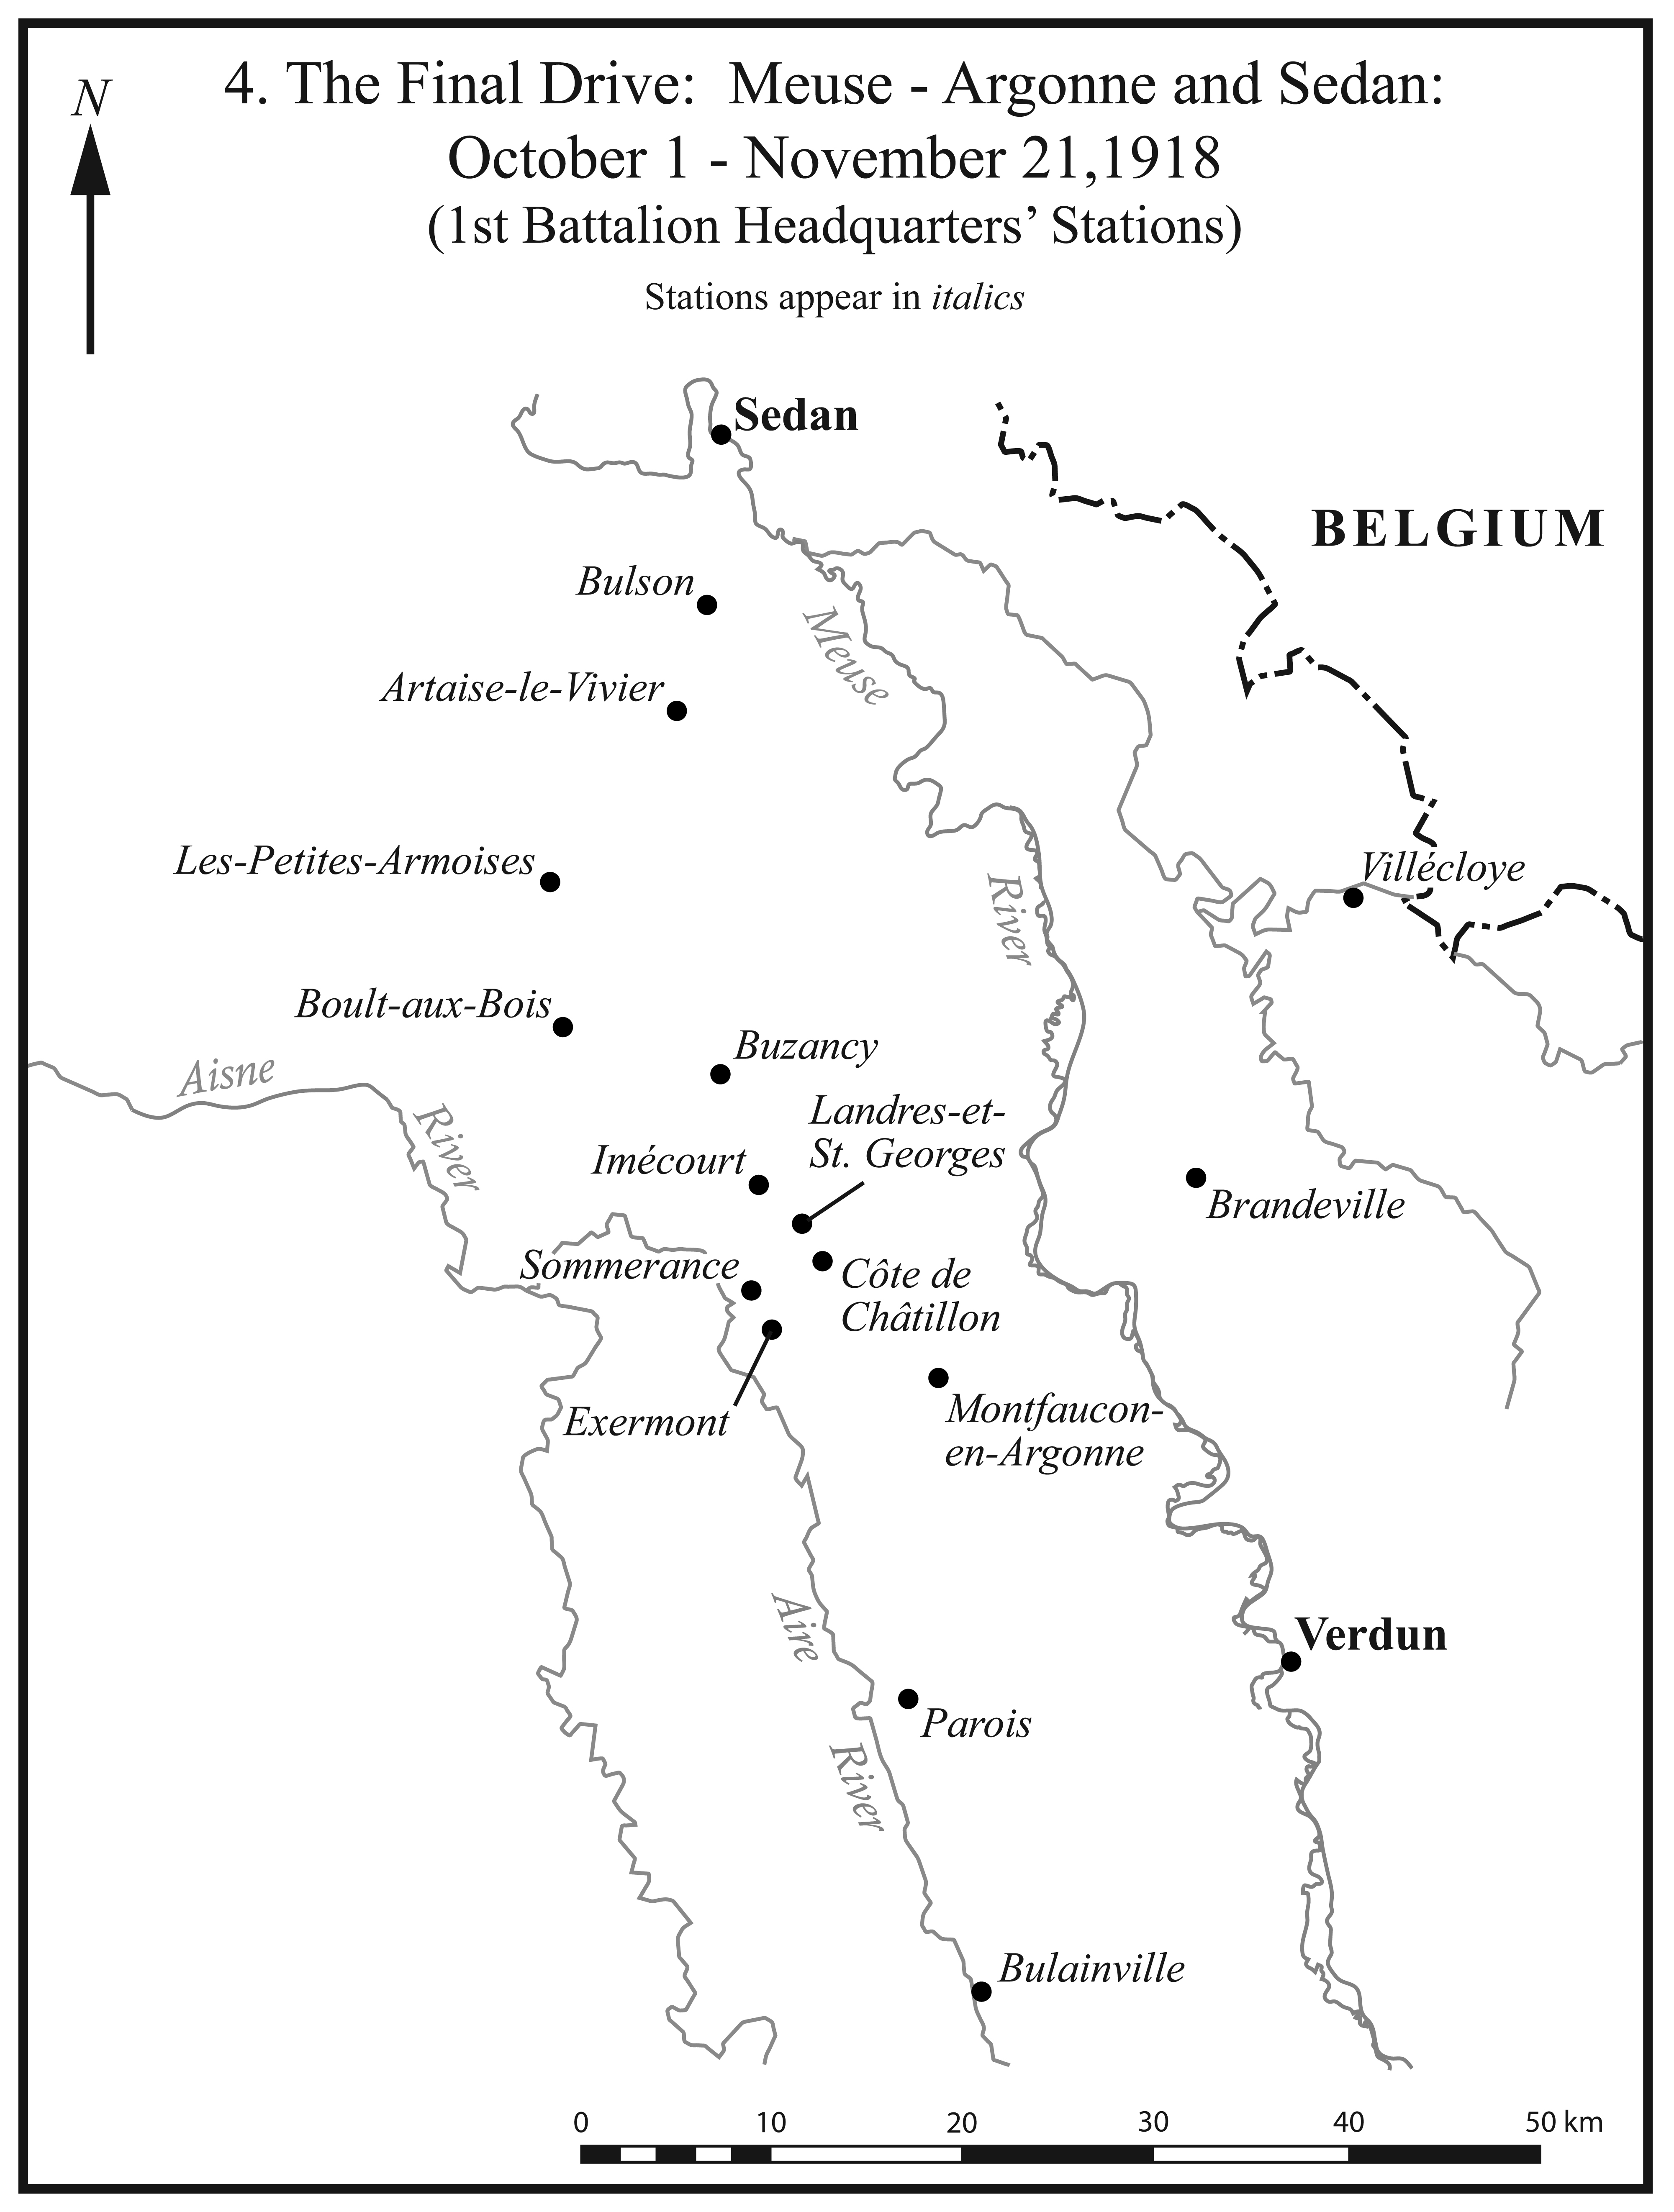 I.4. Meuse-Argonne and Sedan Stations.